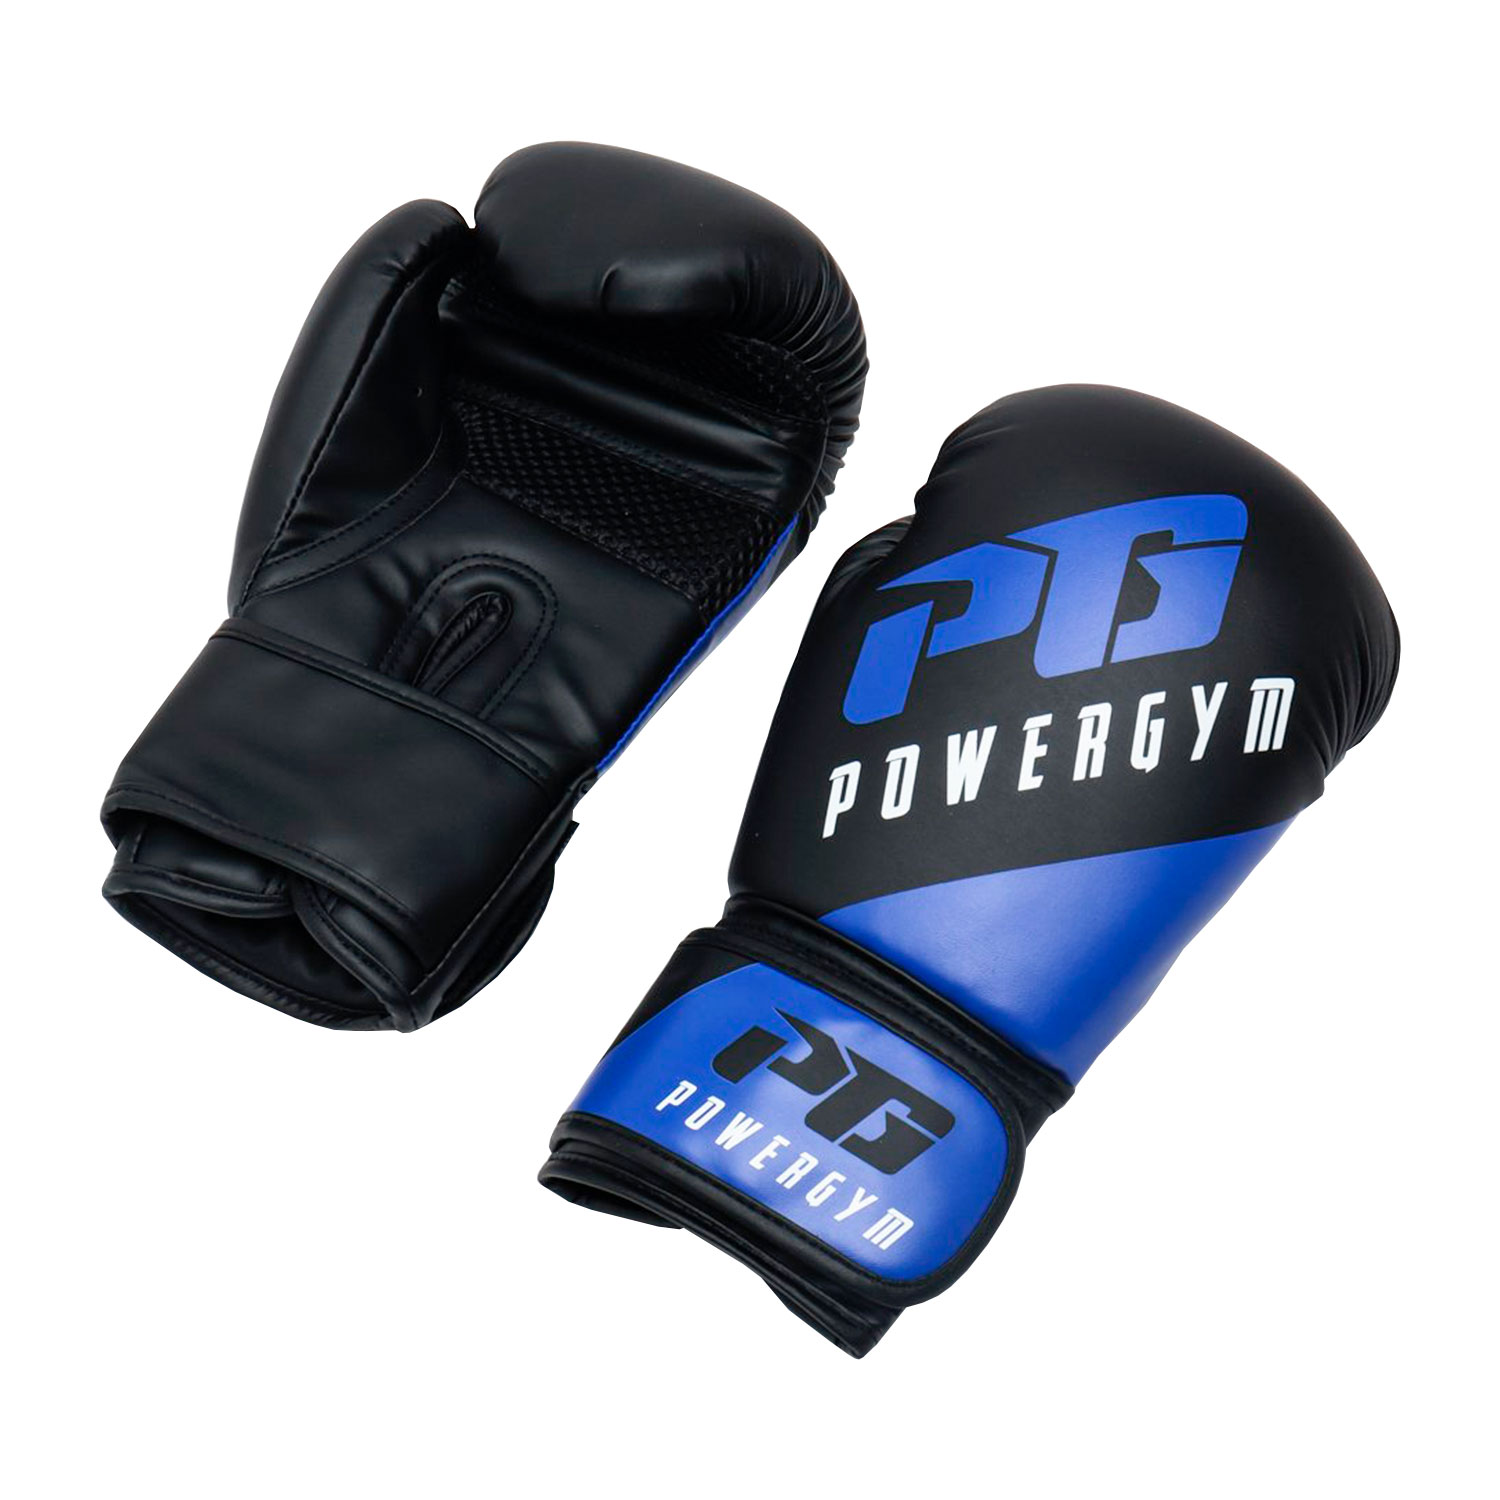 Боксерские перчатки PowerGym